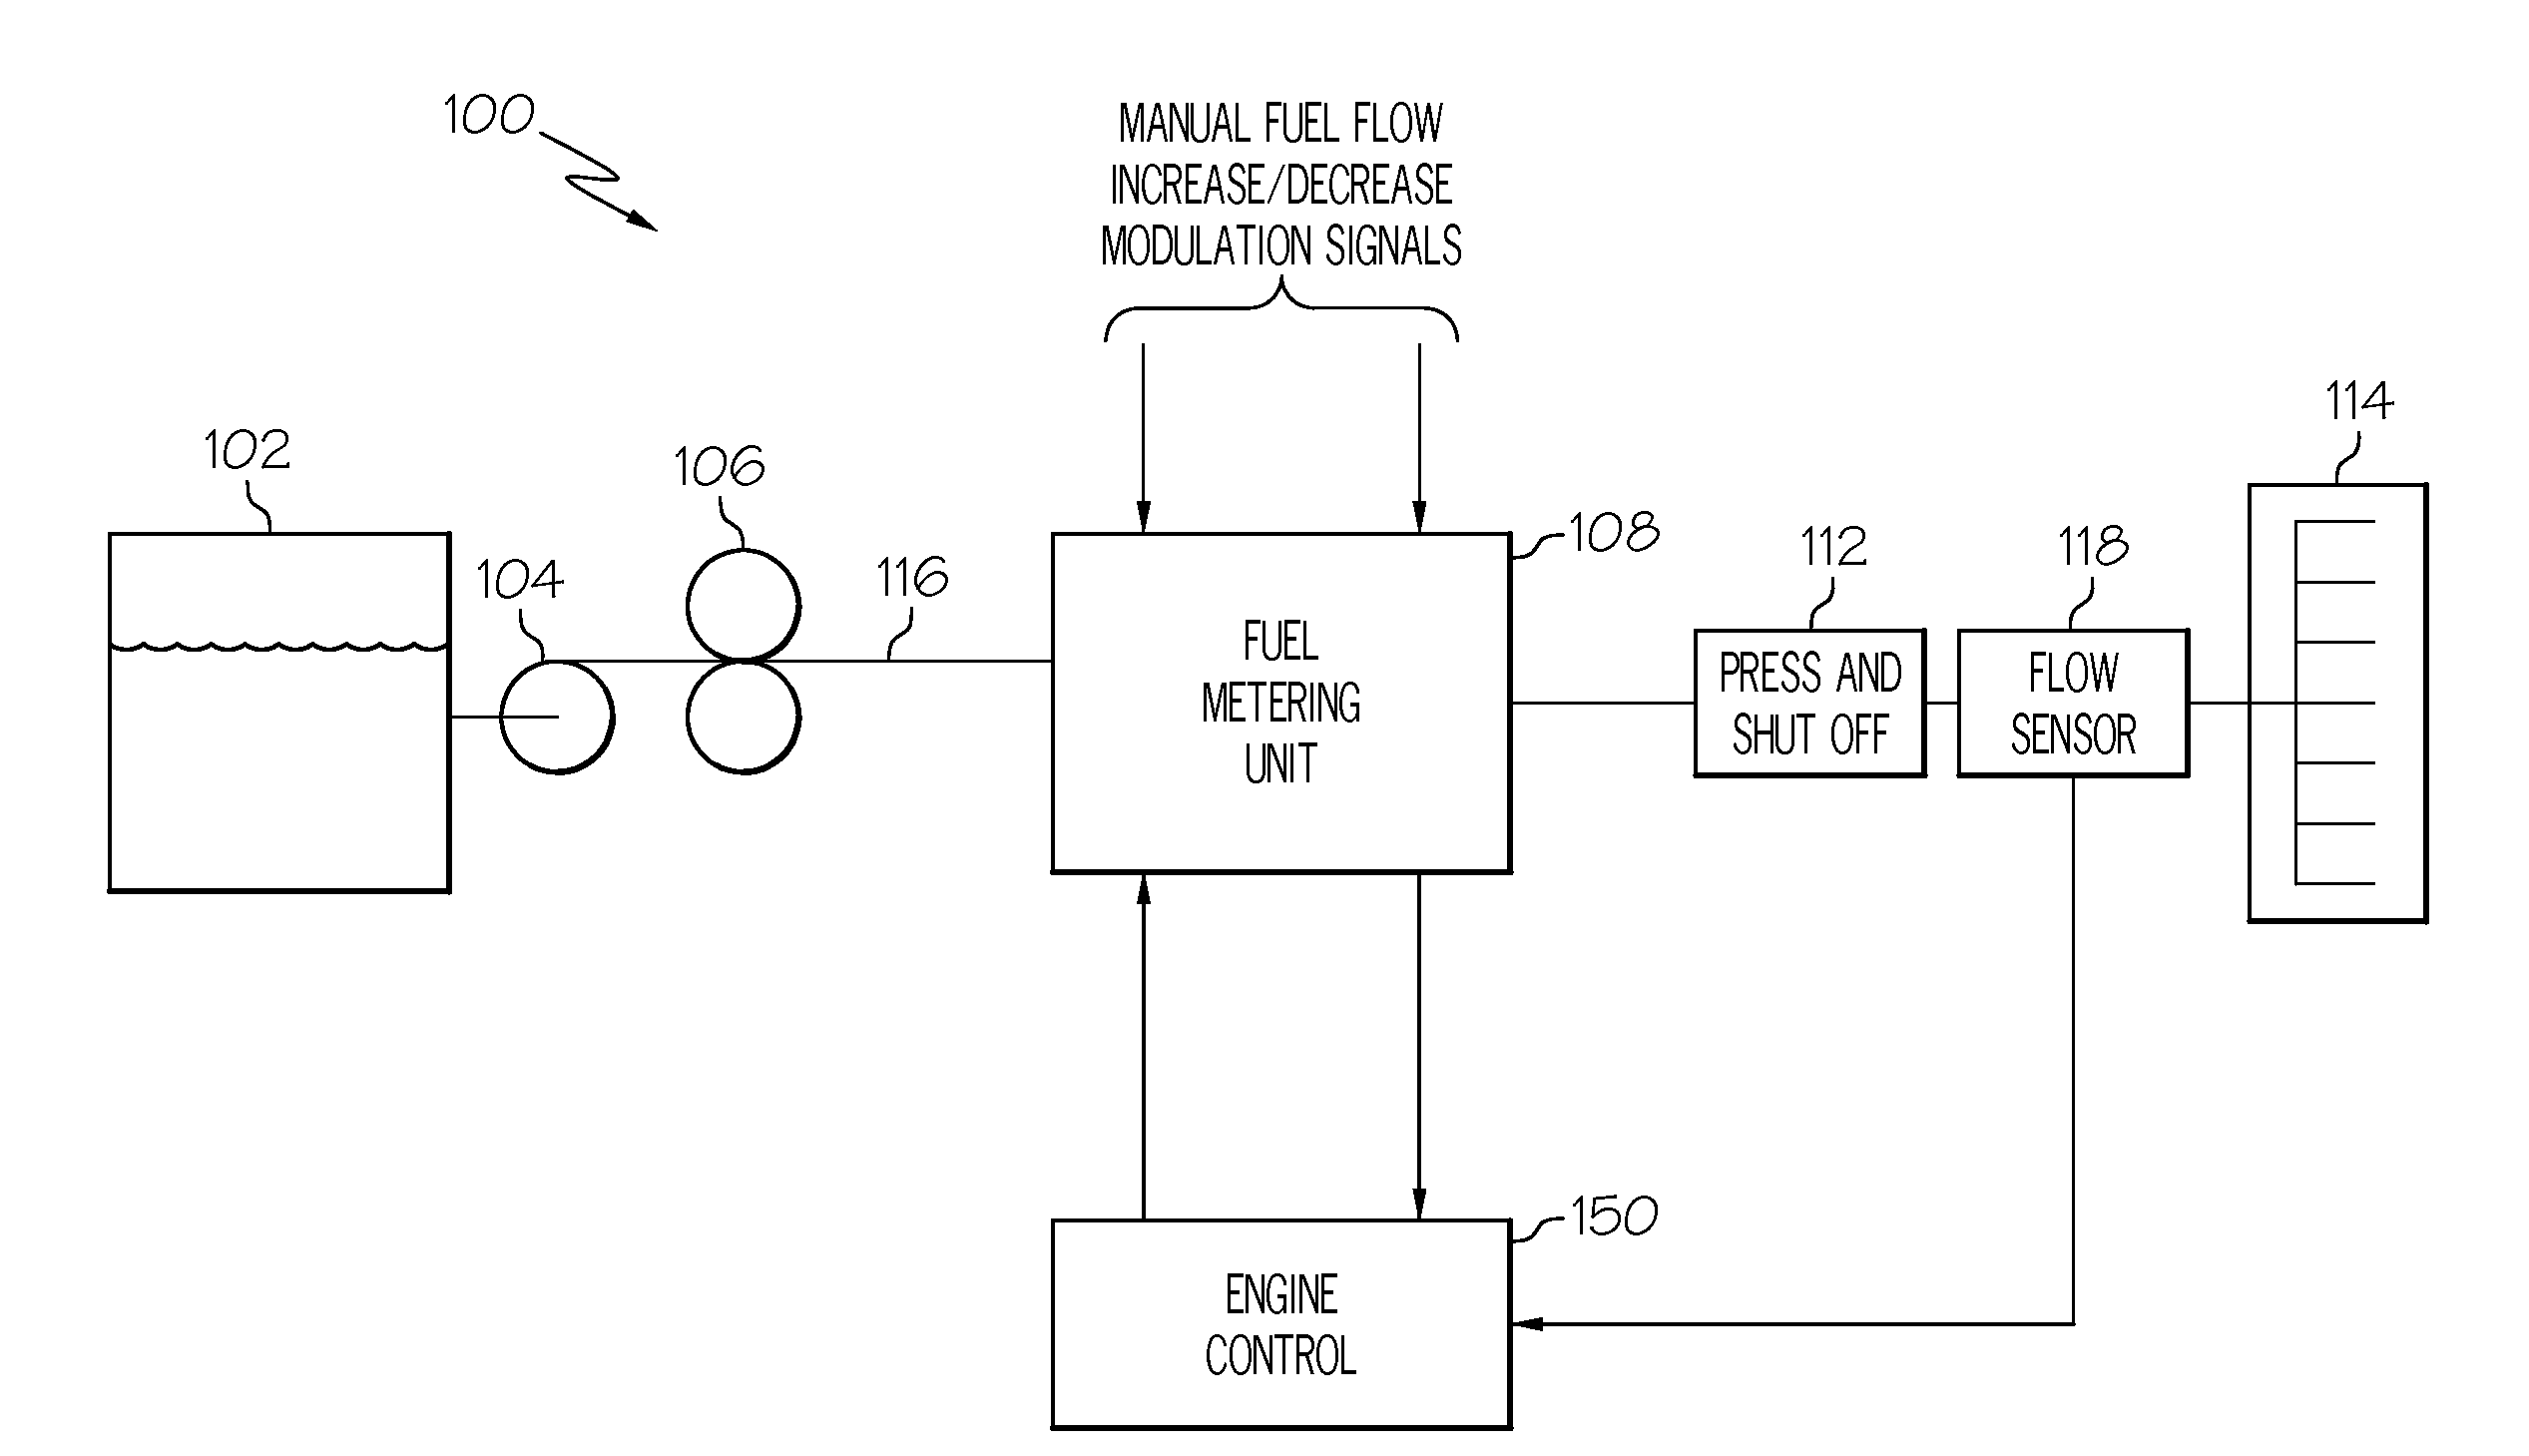 Fuel metering valve back-up position control system